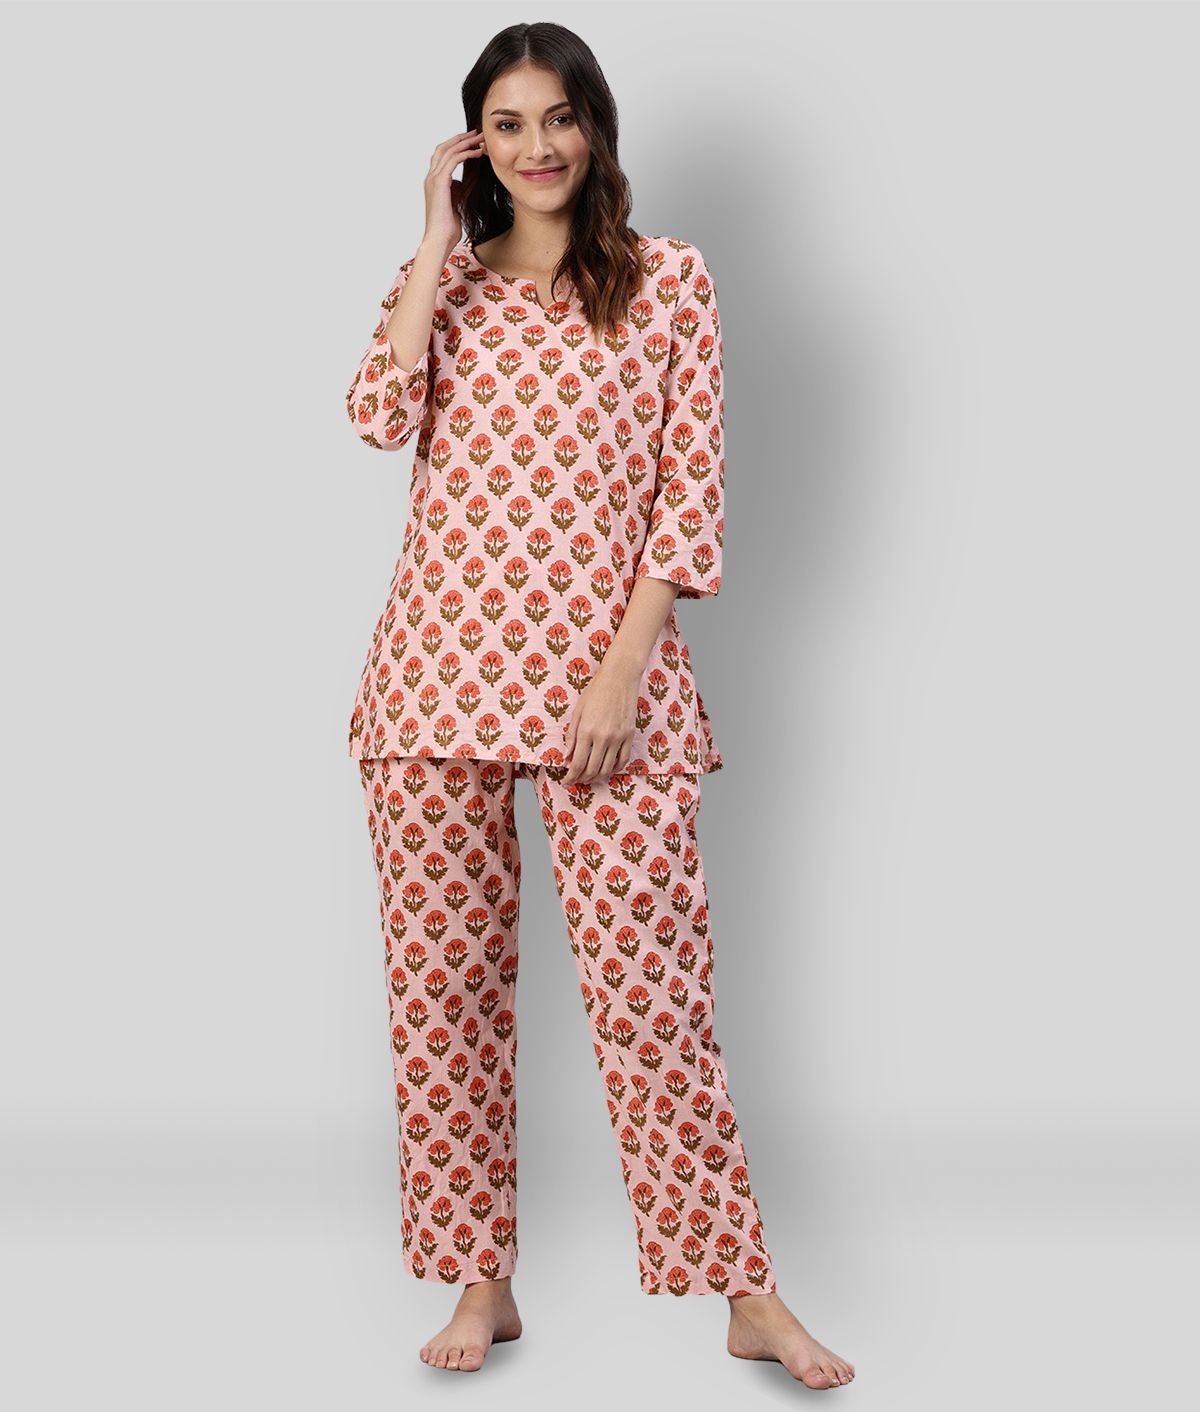     			Divena - Multicolor Cotton Women's Nightwear Nightsuit Sets